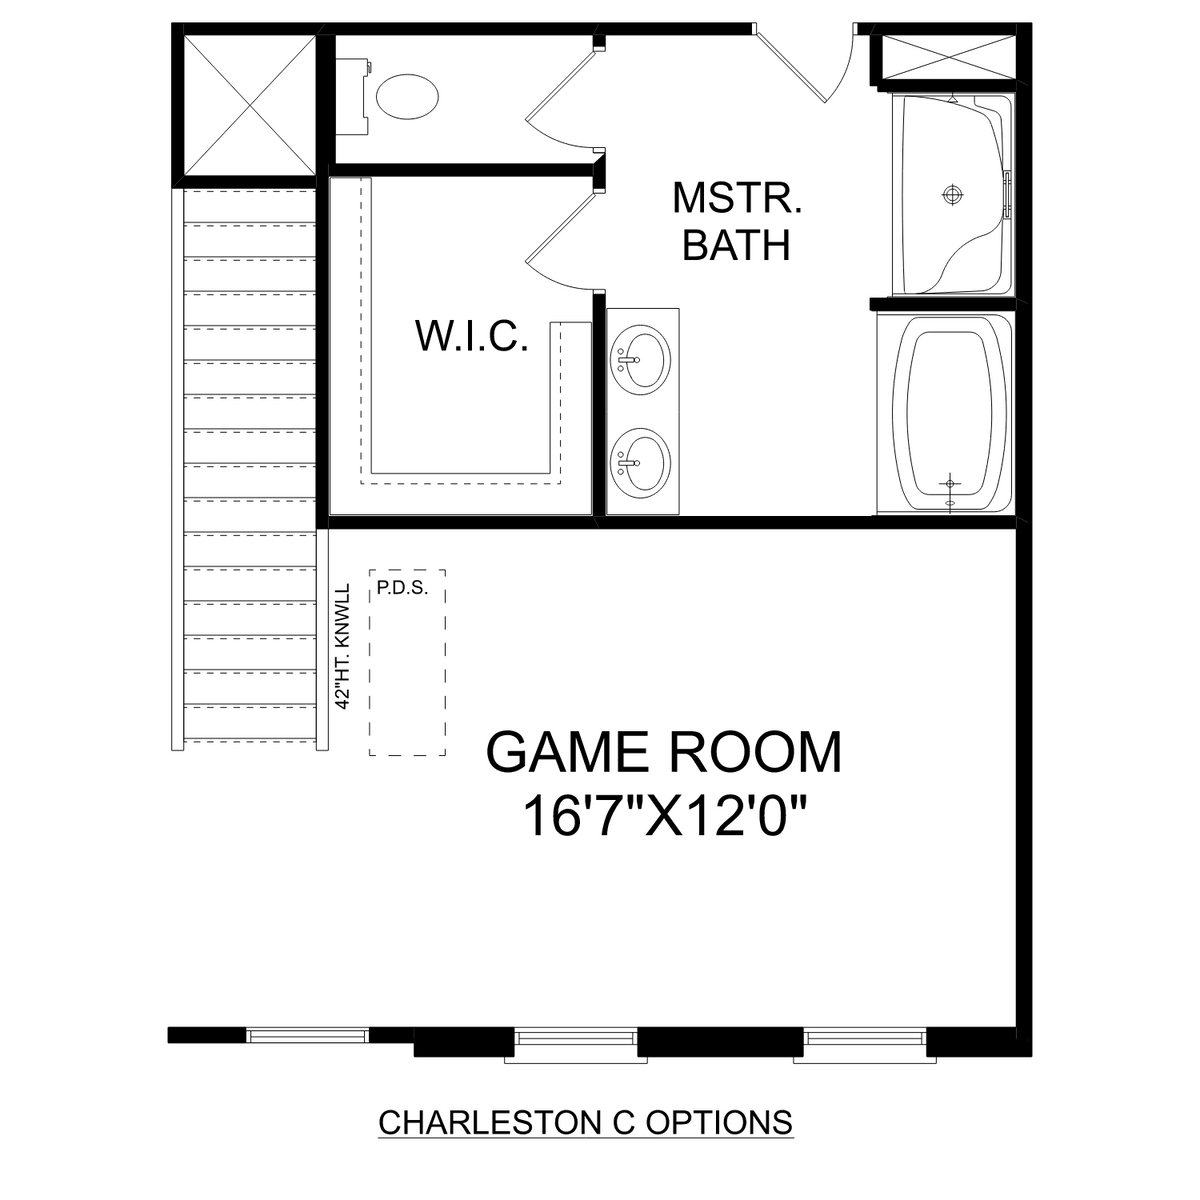 3 - The Charleston C buildable floor plan layout in Davidson Homes' Mallard Landing community.